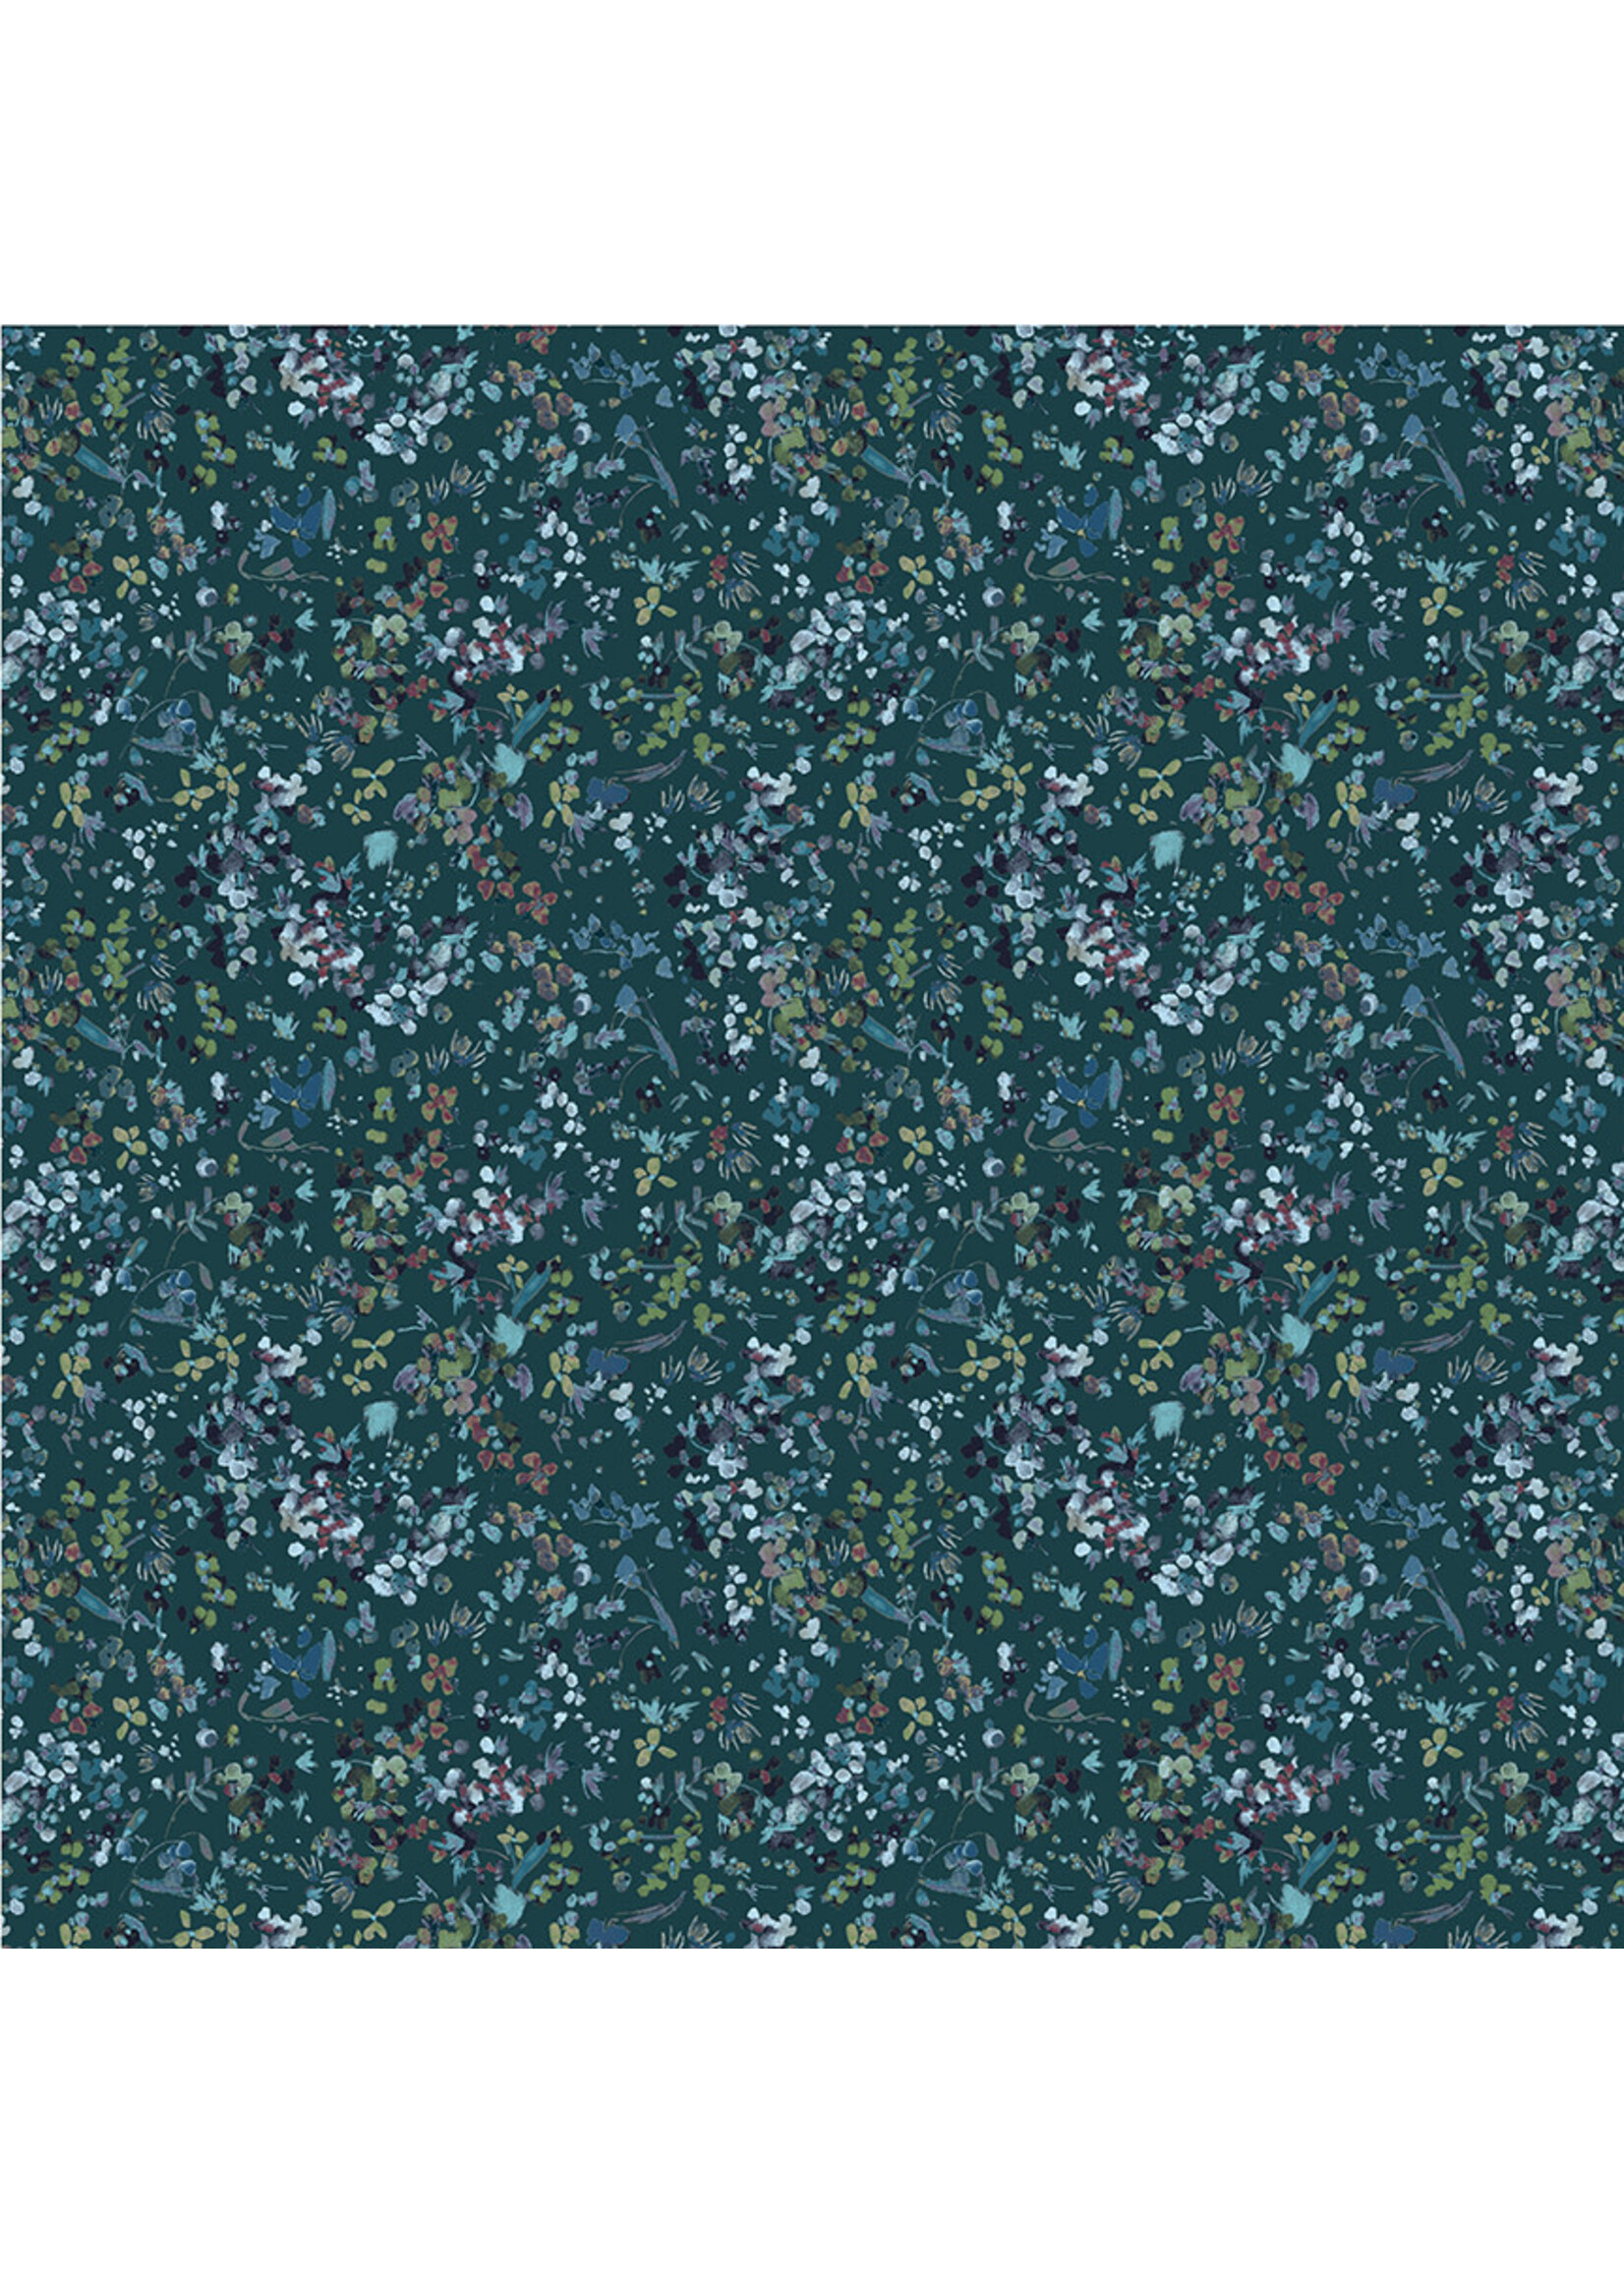 Windham Fabrics Floret - Wildflower - Wintergreen - 380815